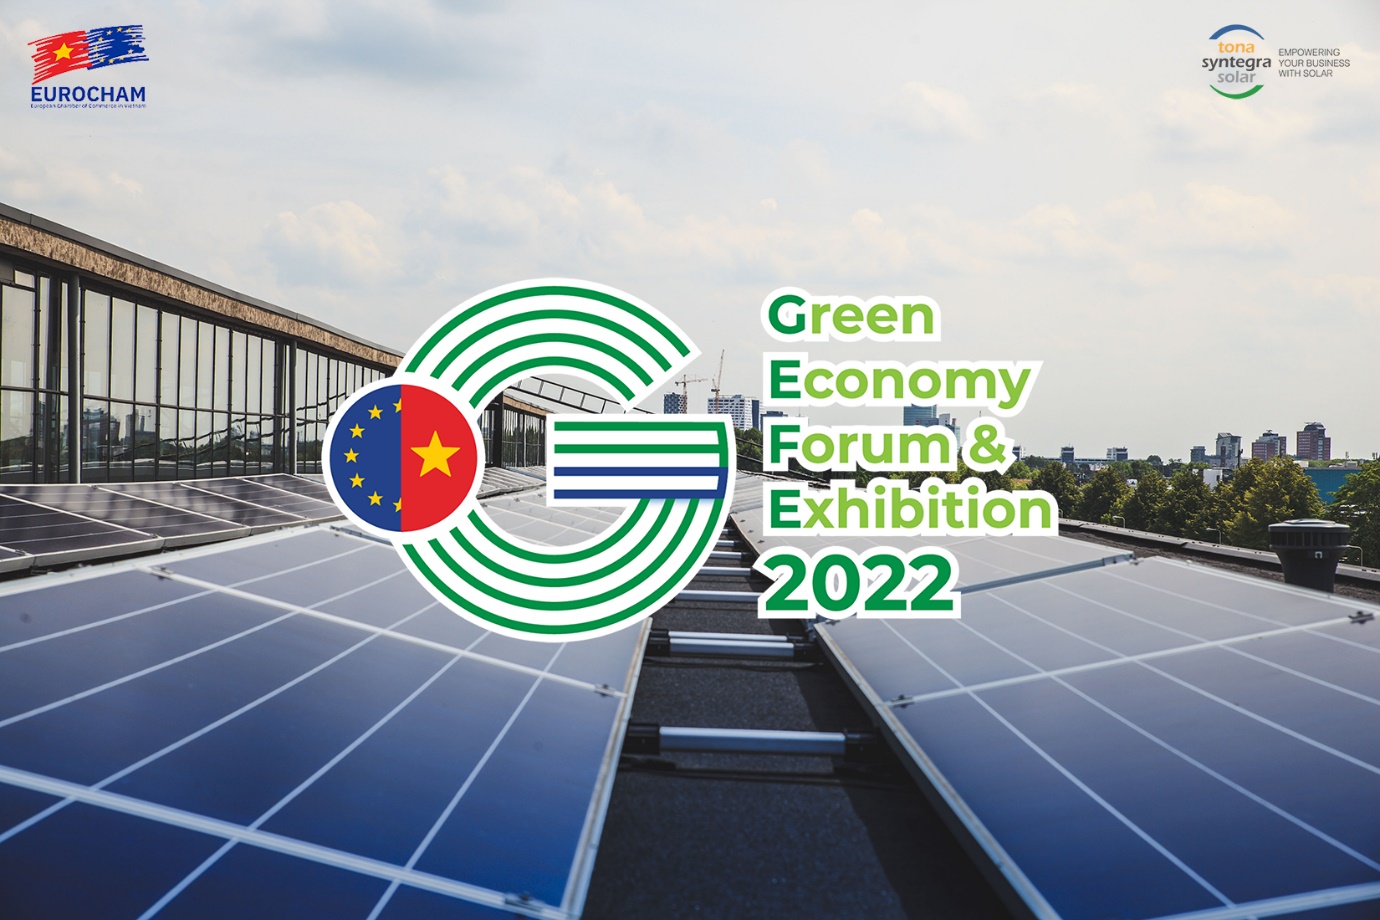 Green Economy Forum & Exhibition 2022 - Tona Syntegra Solar